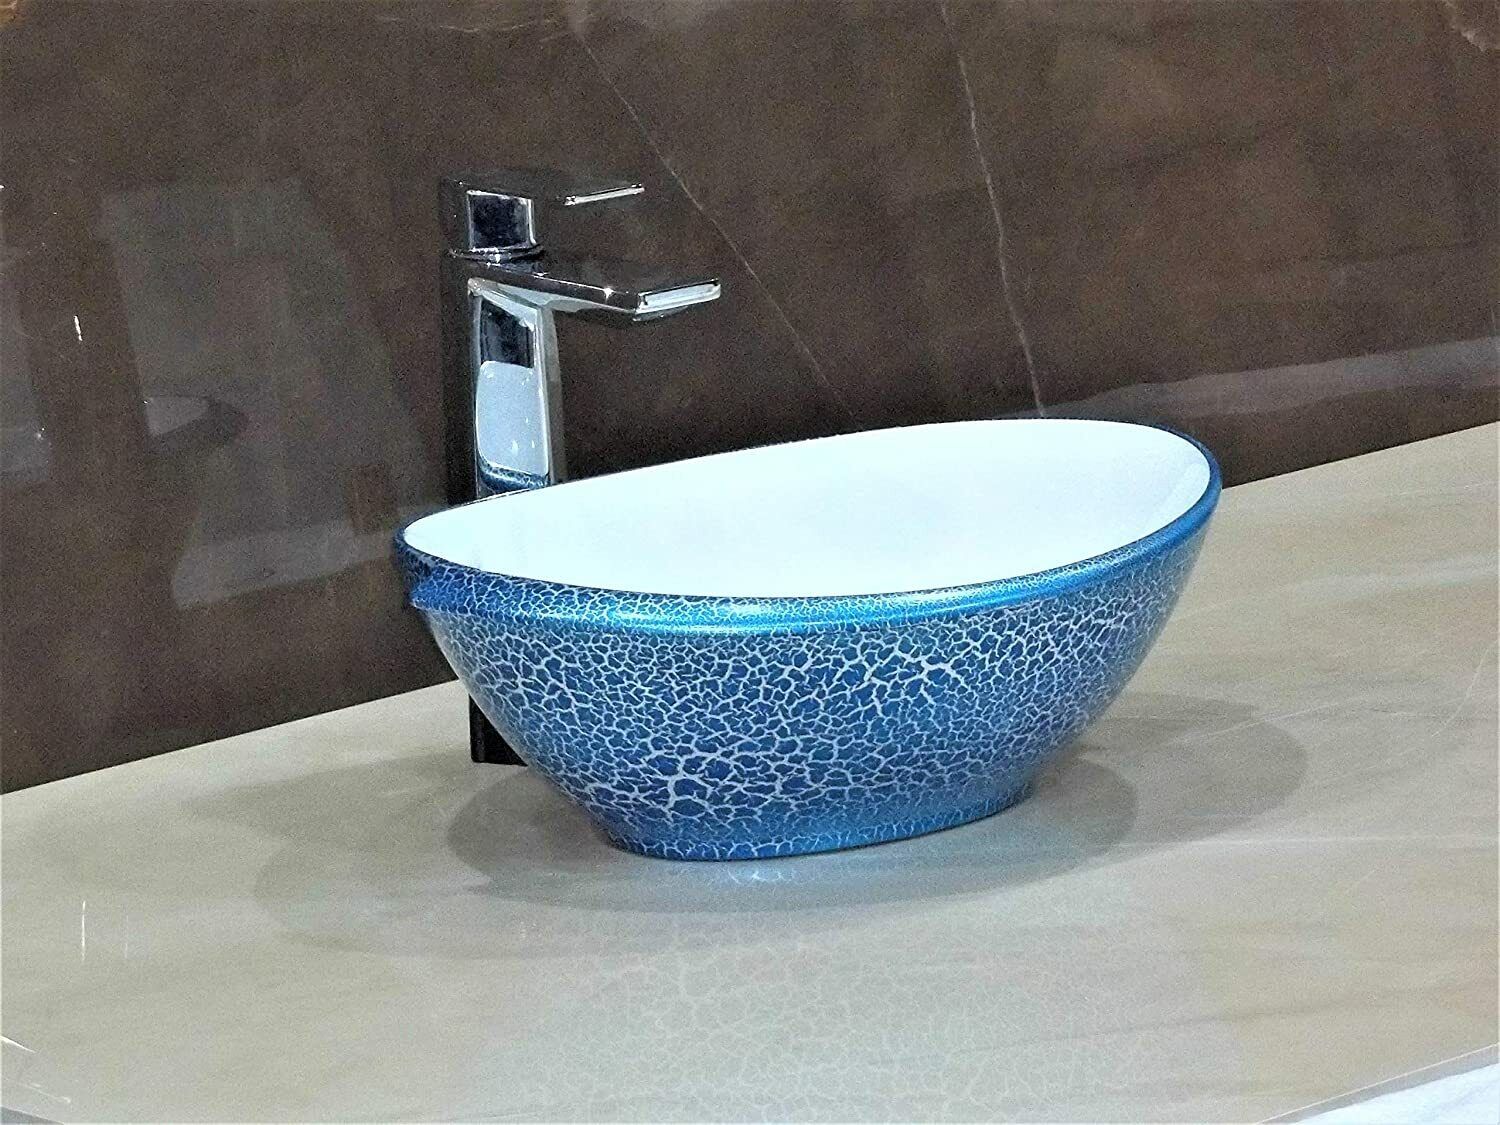 InArt Ceramic Oval Shape Above Counter Top Wash Basin Bathroom Porcelain Vessel Sink Bowl For Lavatory/Bathroom 41 x 32 x 14 Cm (Blue White) - InArt-Studio-USA